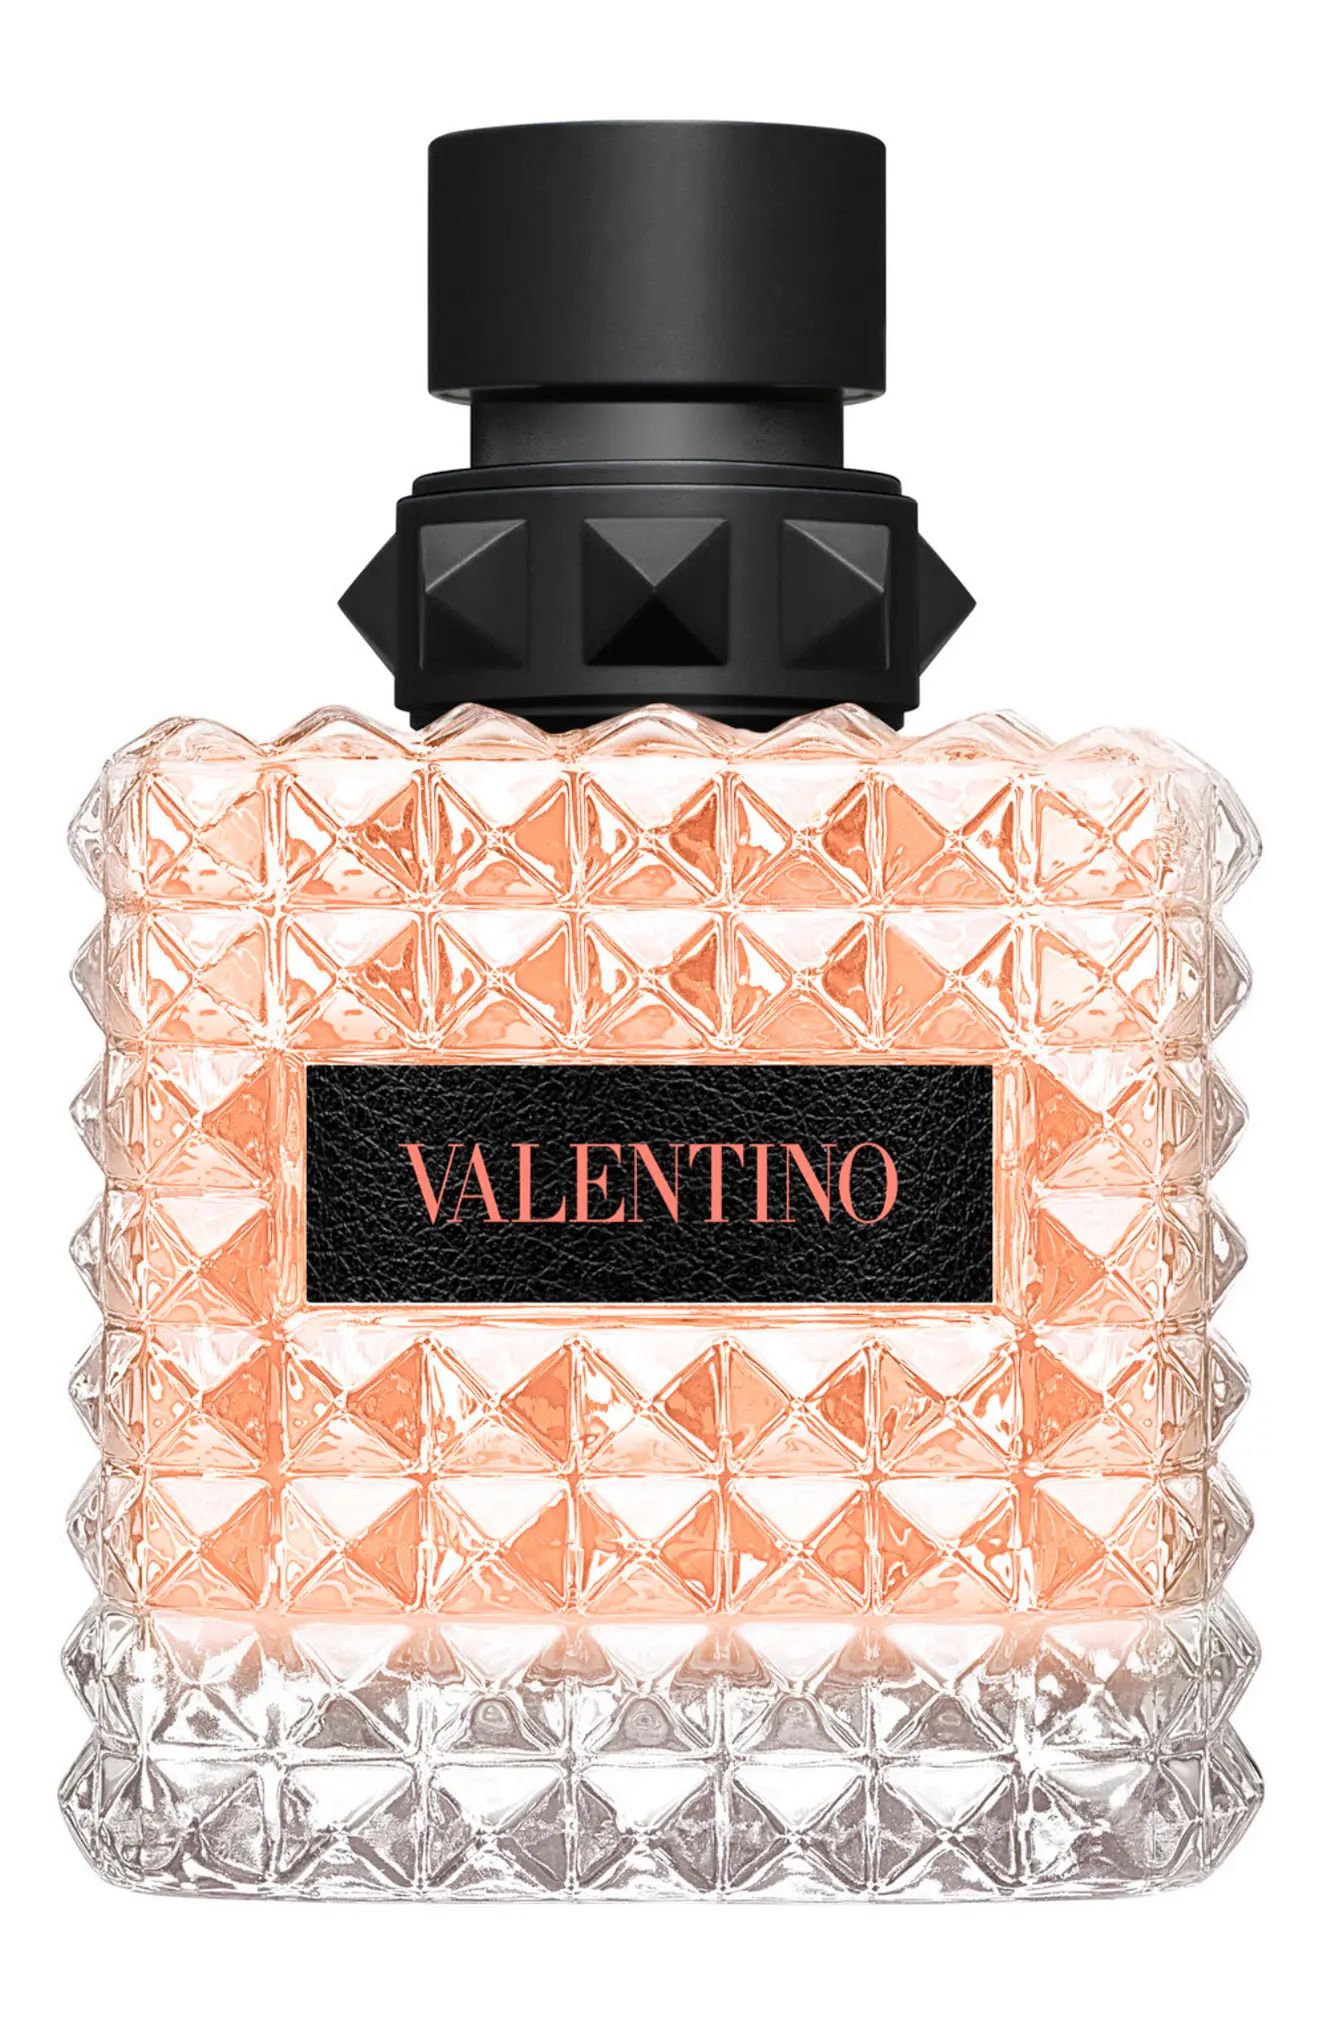 Valentino Donna Born in Roma Coral Fantasy Eau de Parfum at Nordstrom, Size 3.4 Oz | Nordstrom